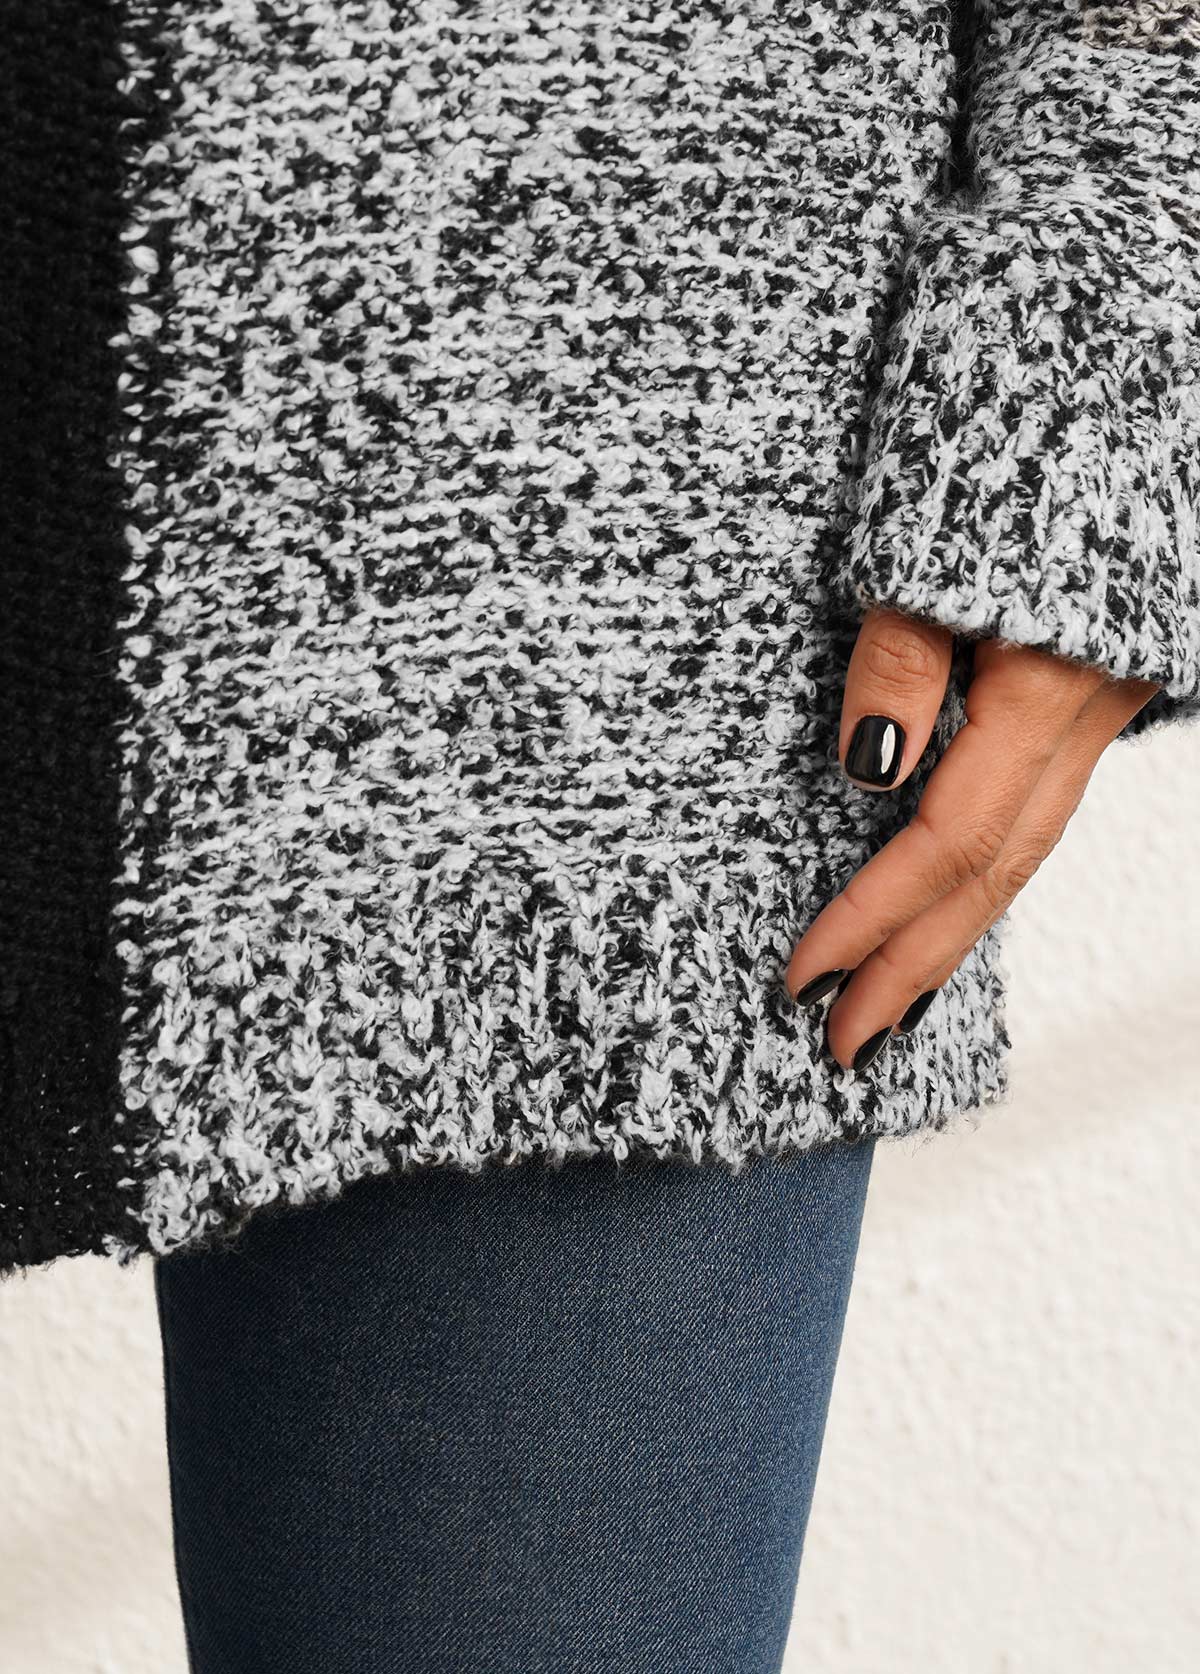 Contrast Long Sleeve V Neck Sweater